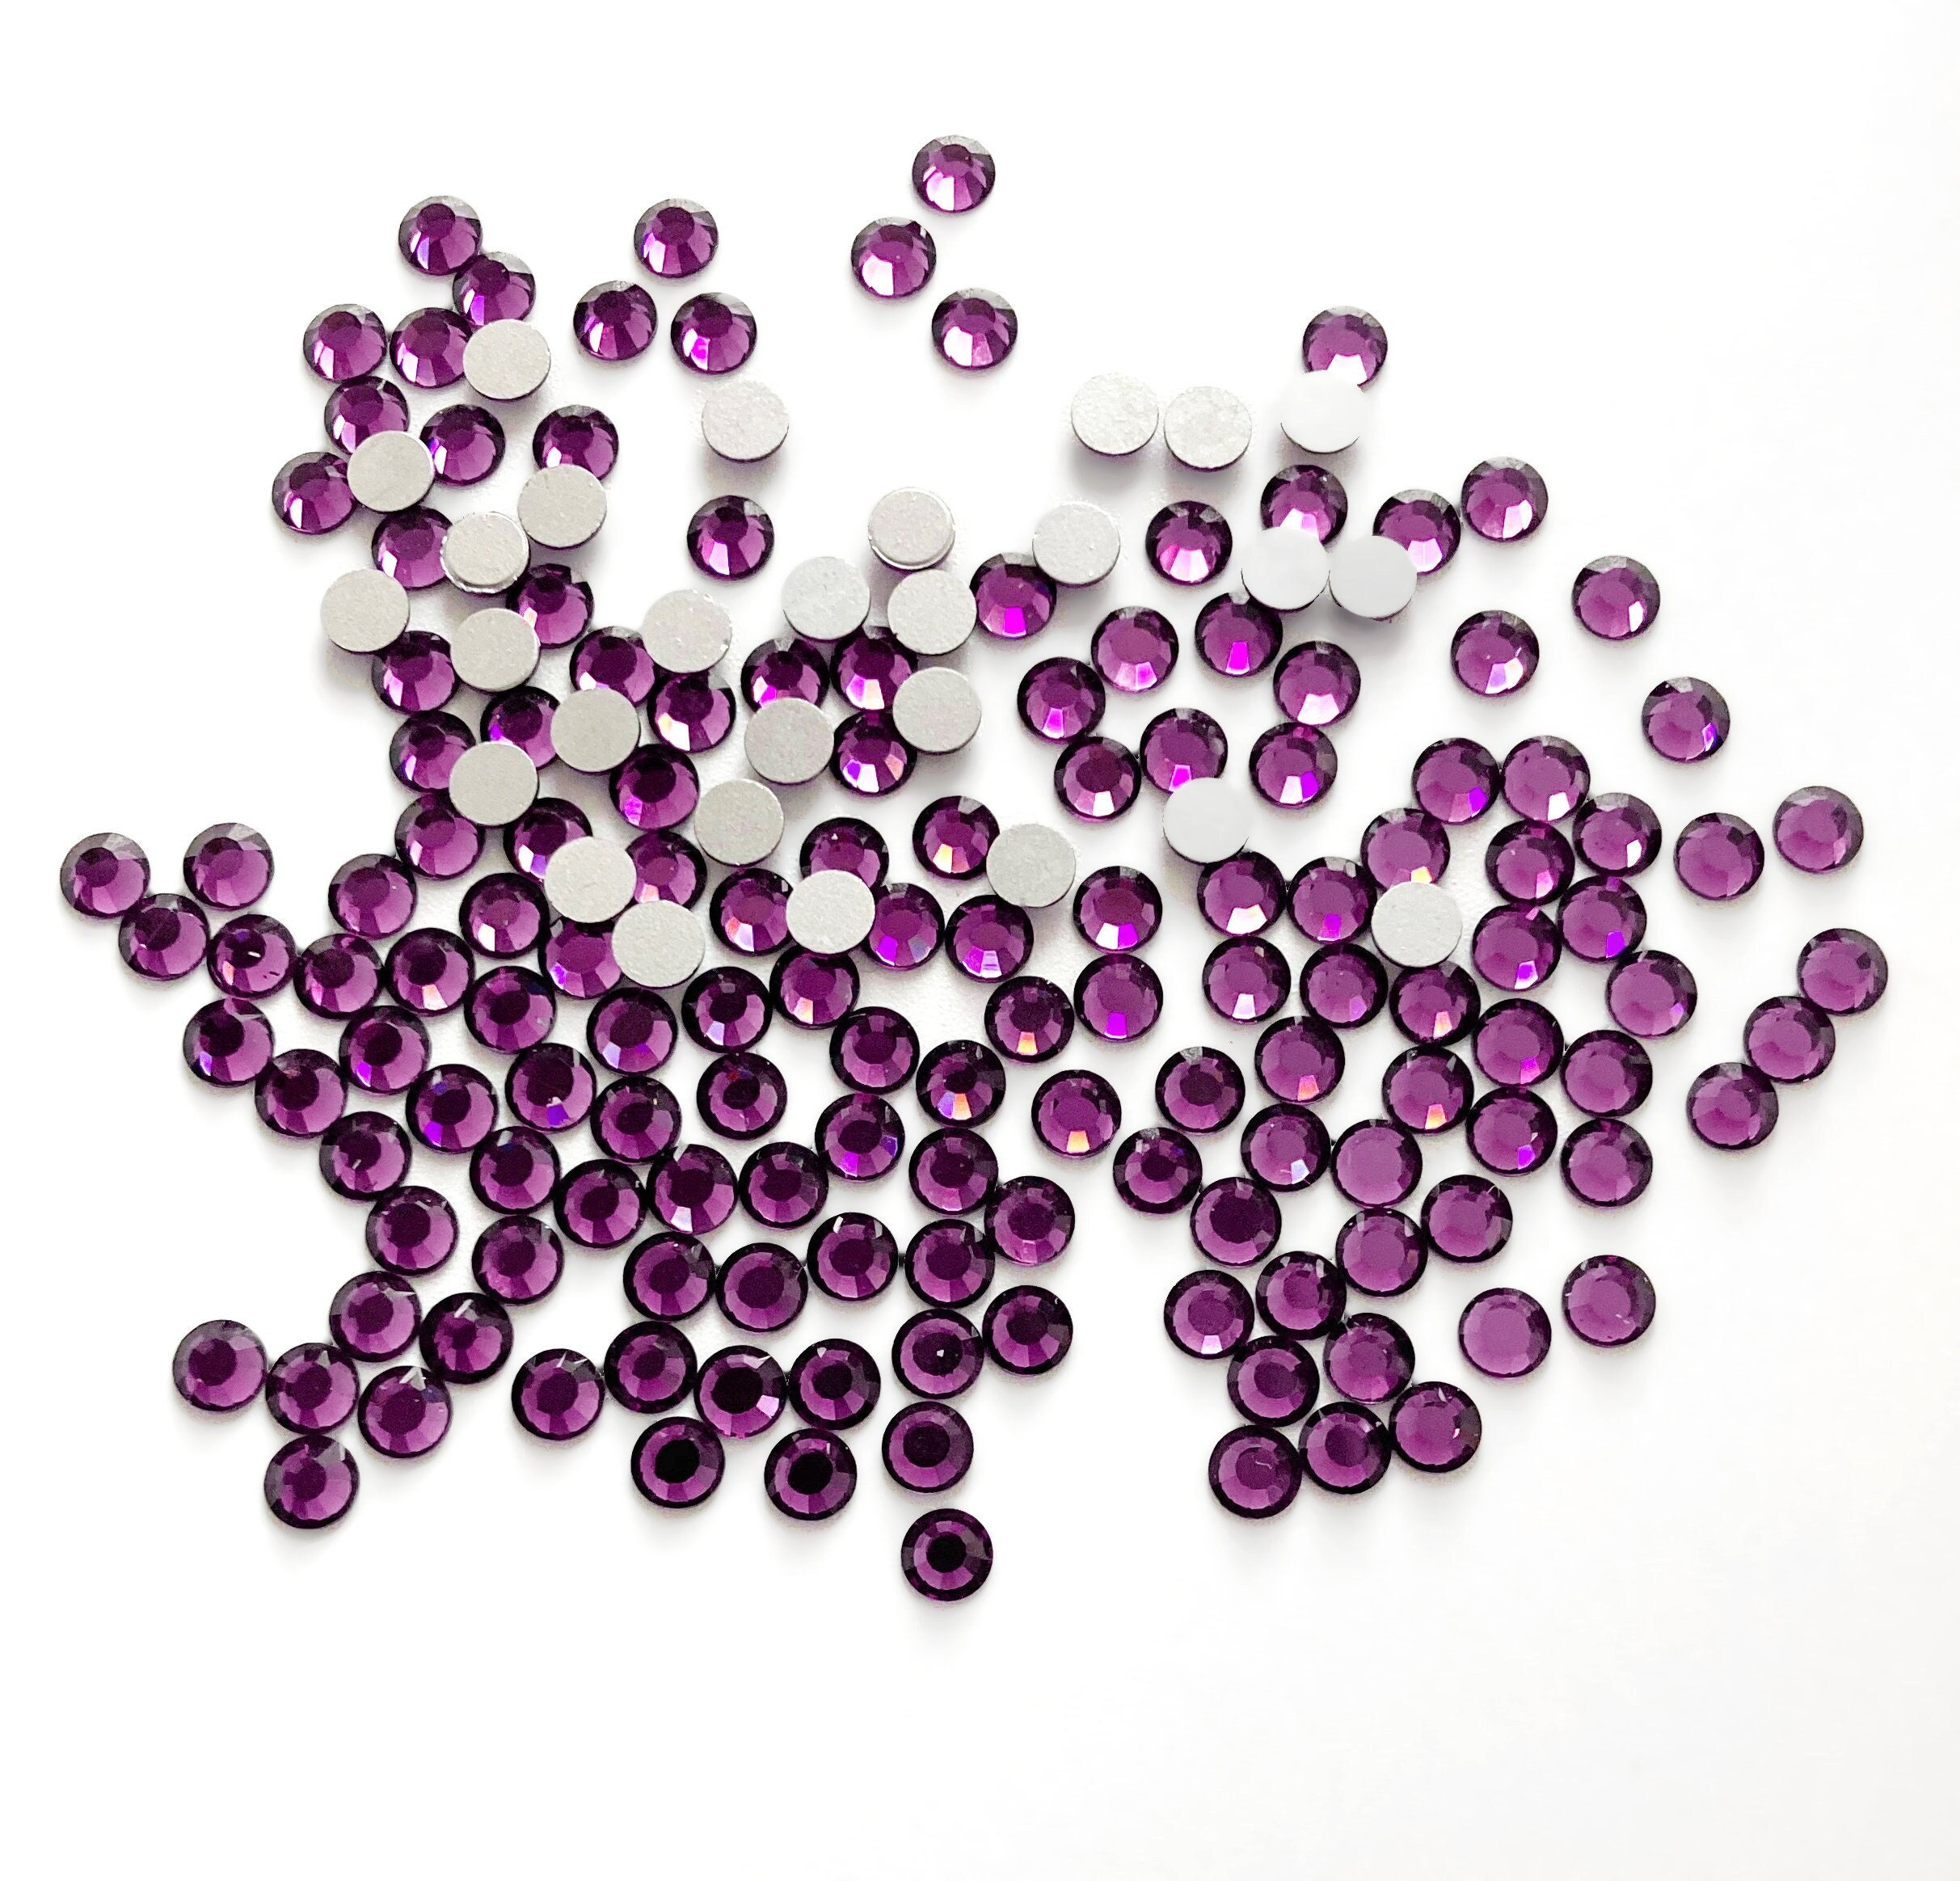 Jollin Glue Fix Crystal AB Flatback Rhinestones (ss20 576pcs, Light-Purple  AB) : Precio Guatemala